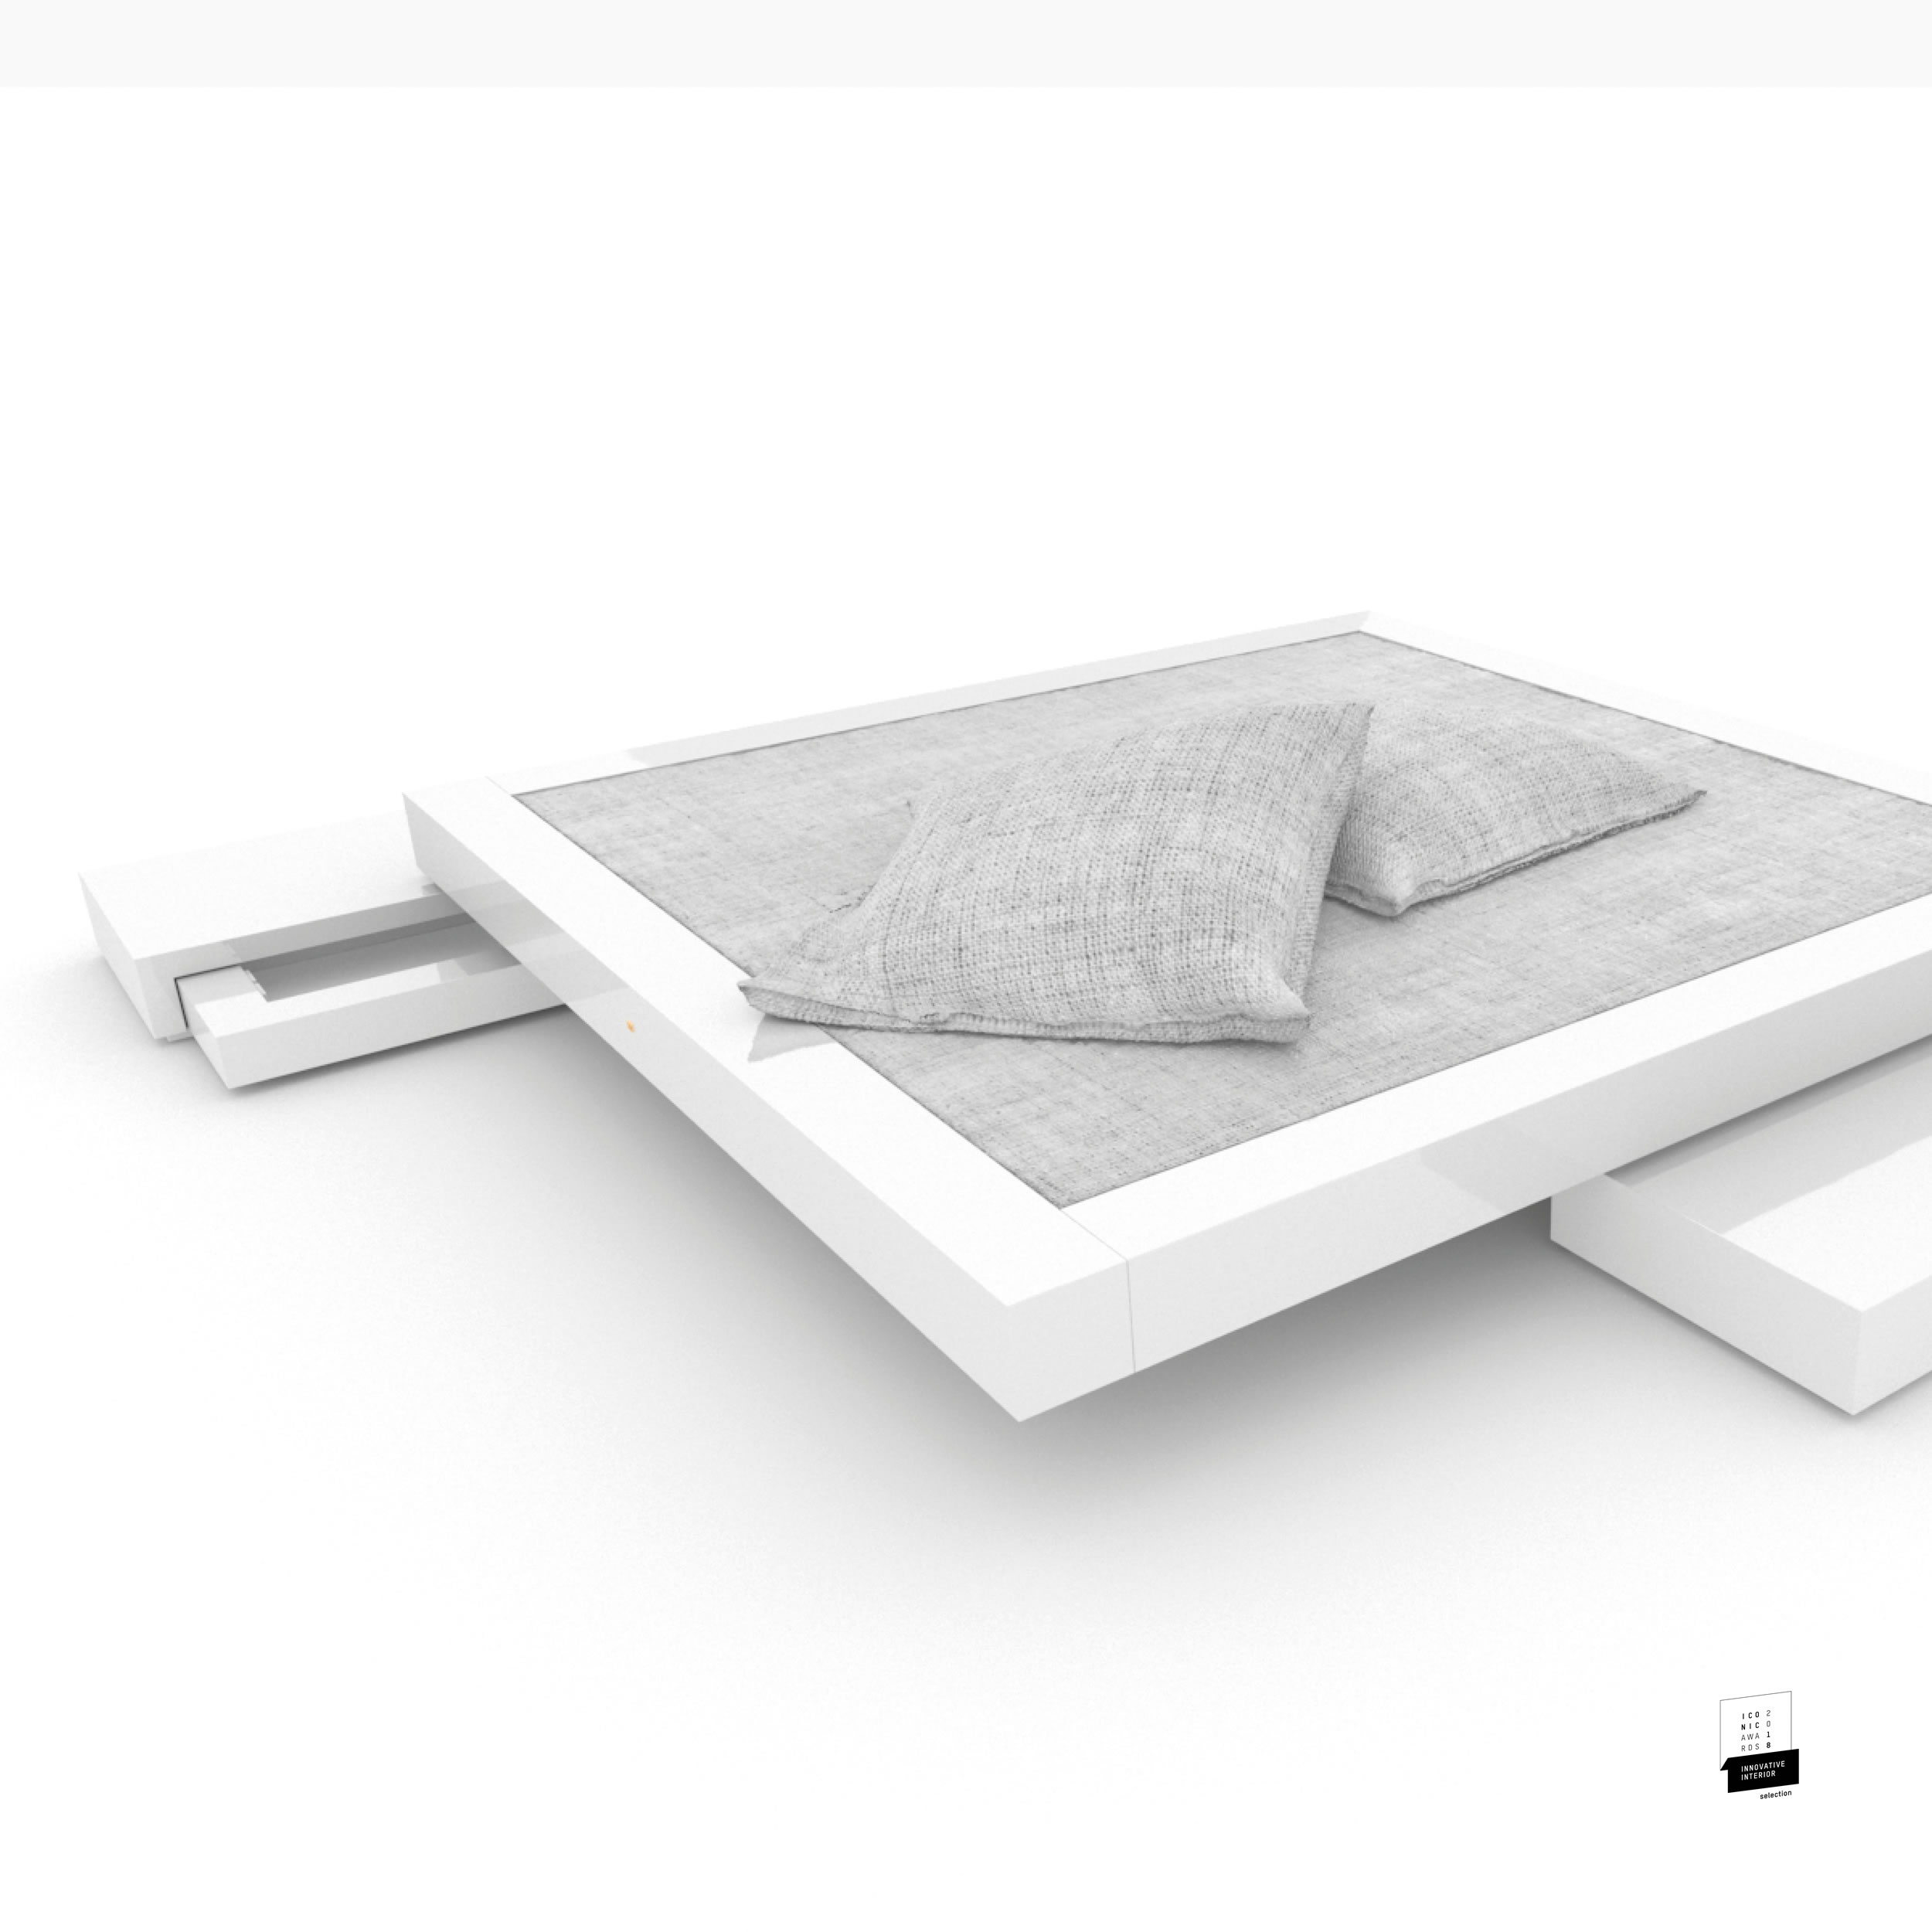 Bett flach weiss bolddesign Schlafzimmer one of akind Betten FS 16 FELIX SCHWAKE